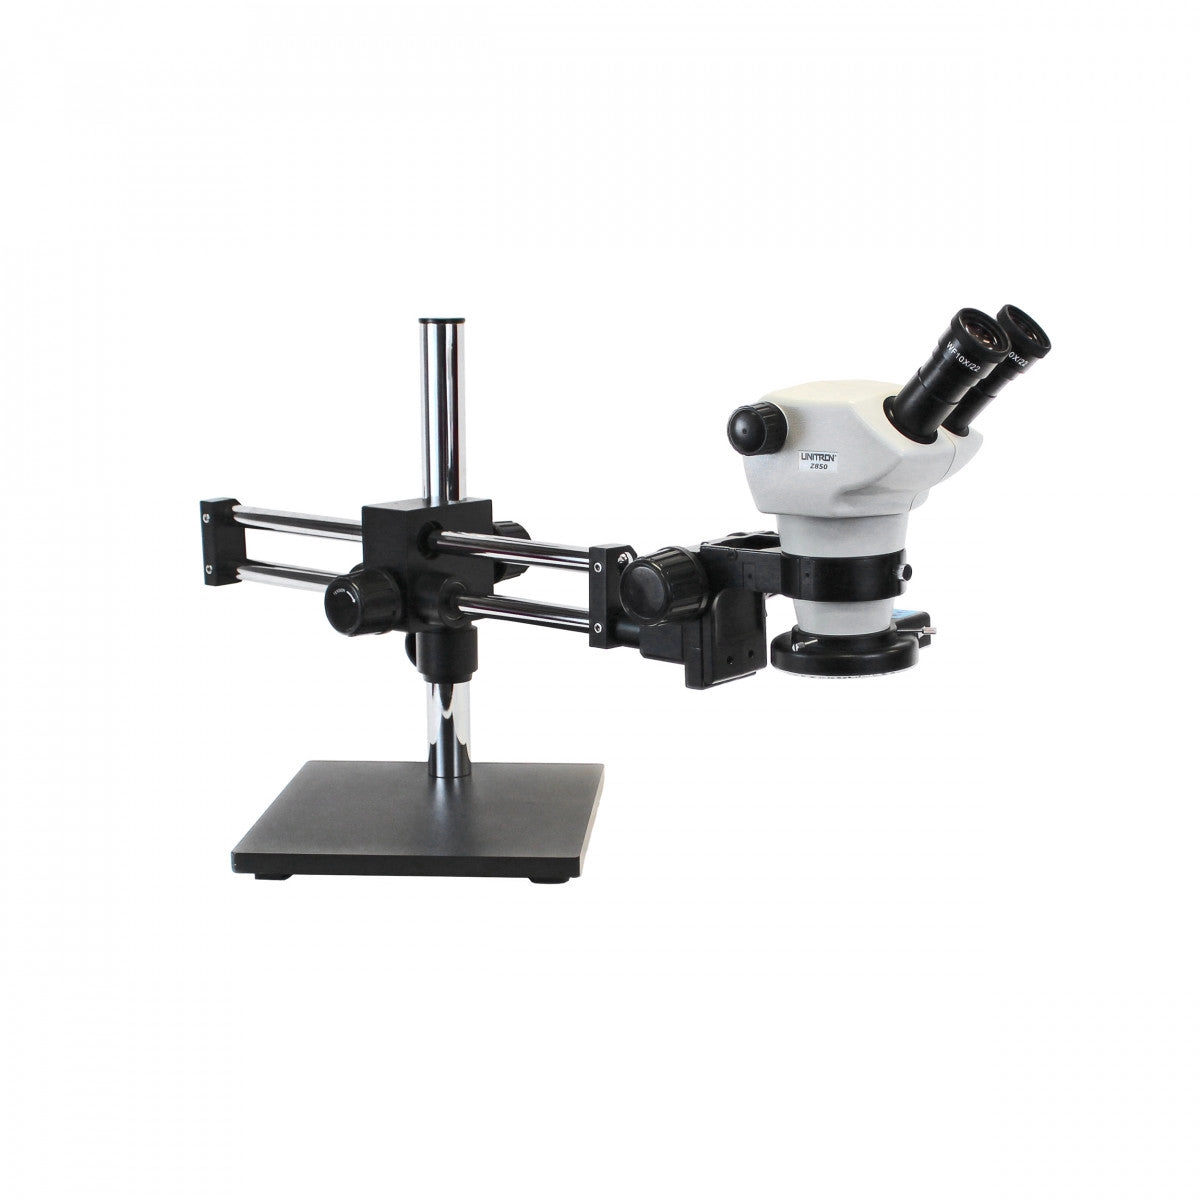 Unitron Z850 Zoom Stereo Microscope, Binocular, Ball Bearing Boom Stand, 0.5x Aux Objective, Quad LED Ring Light